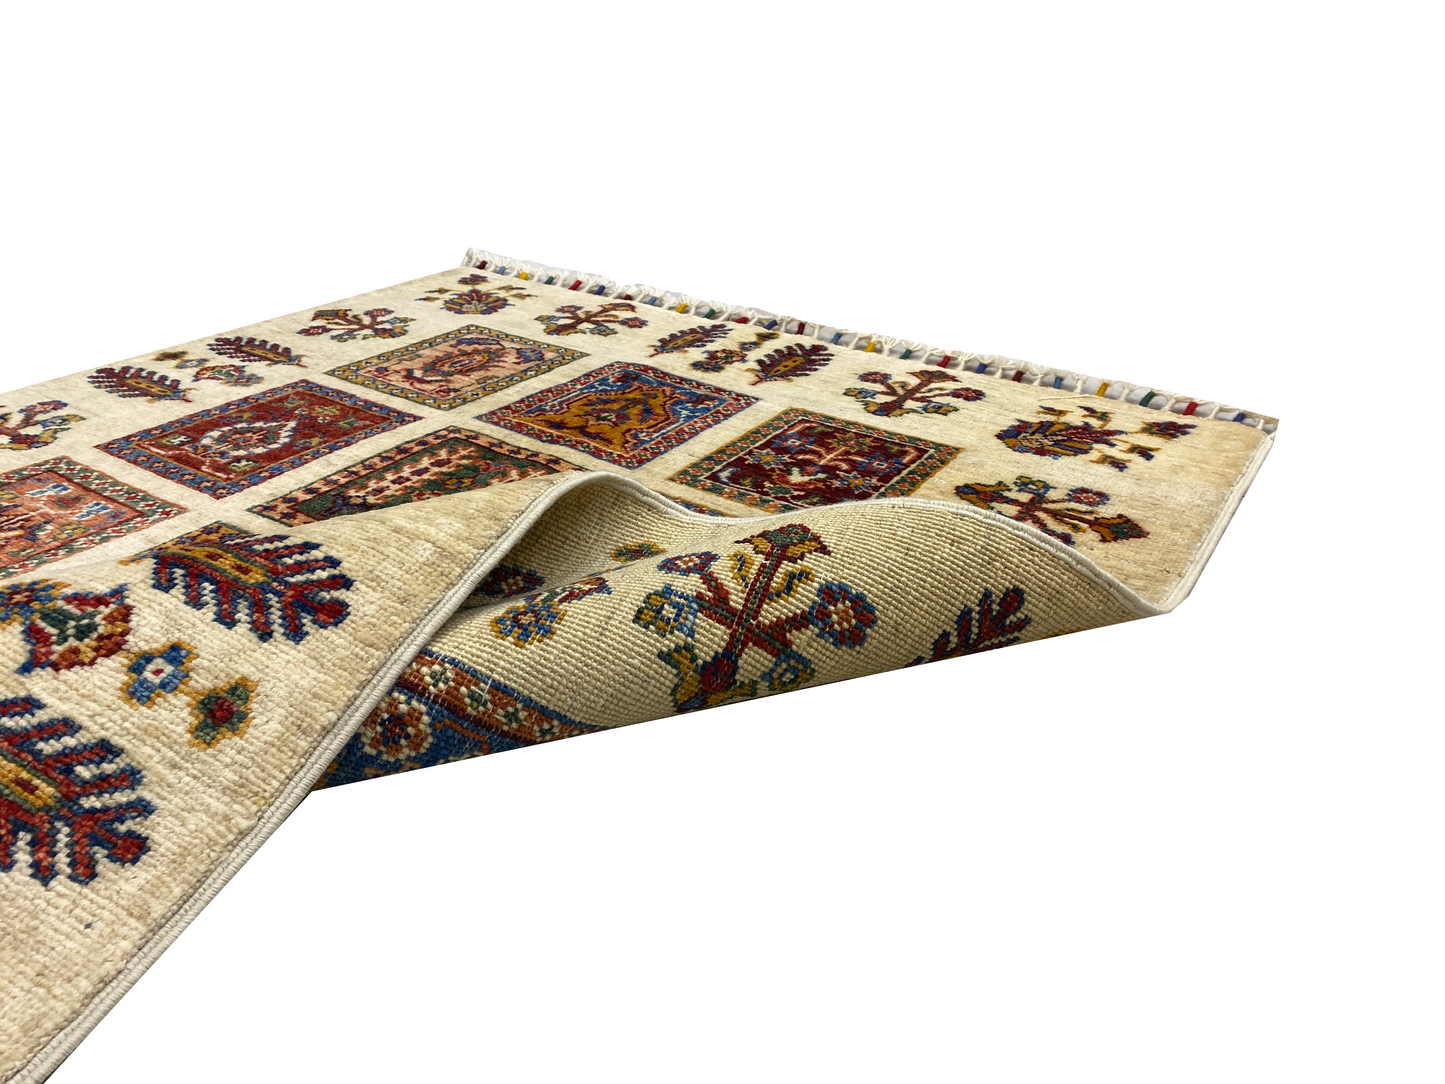 Şirvan Bicolor Carpet 135 x 85 cm